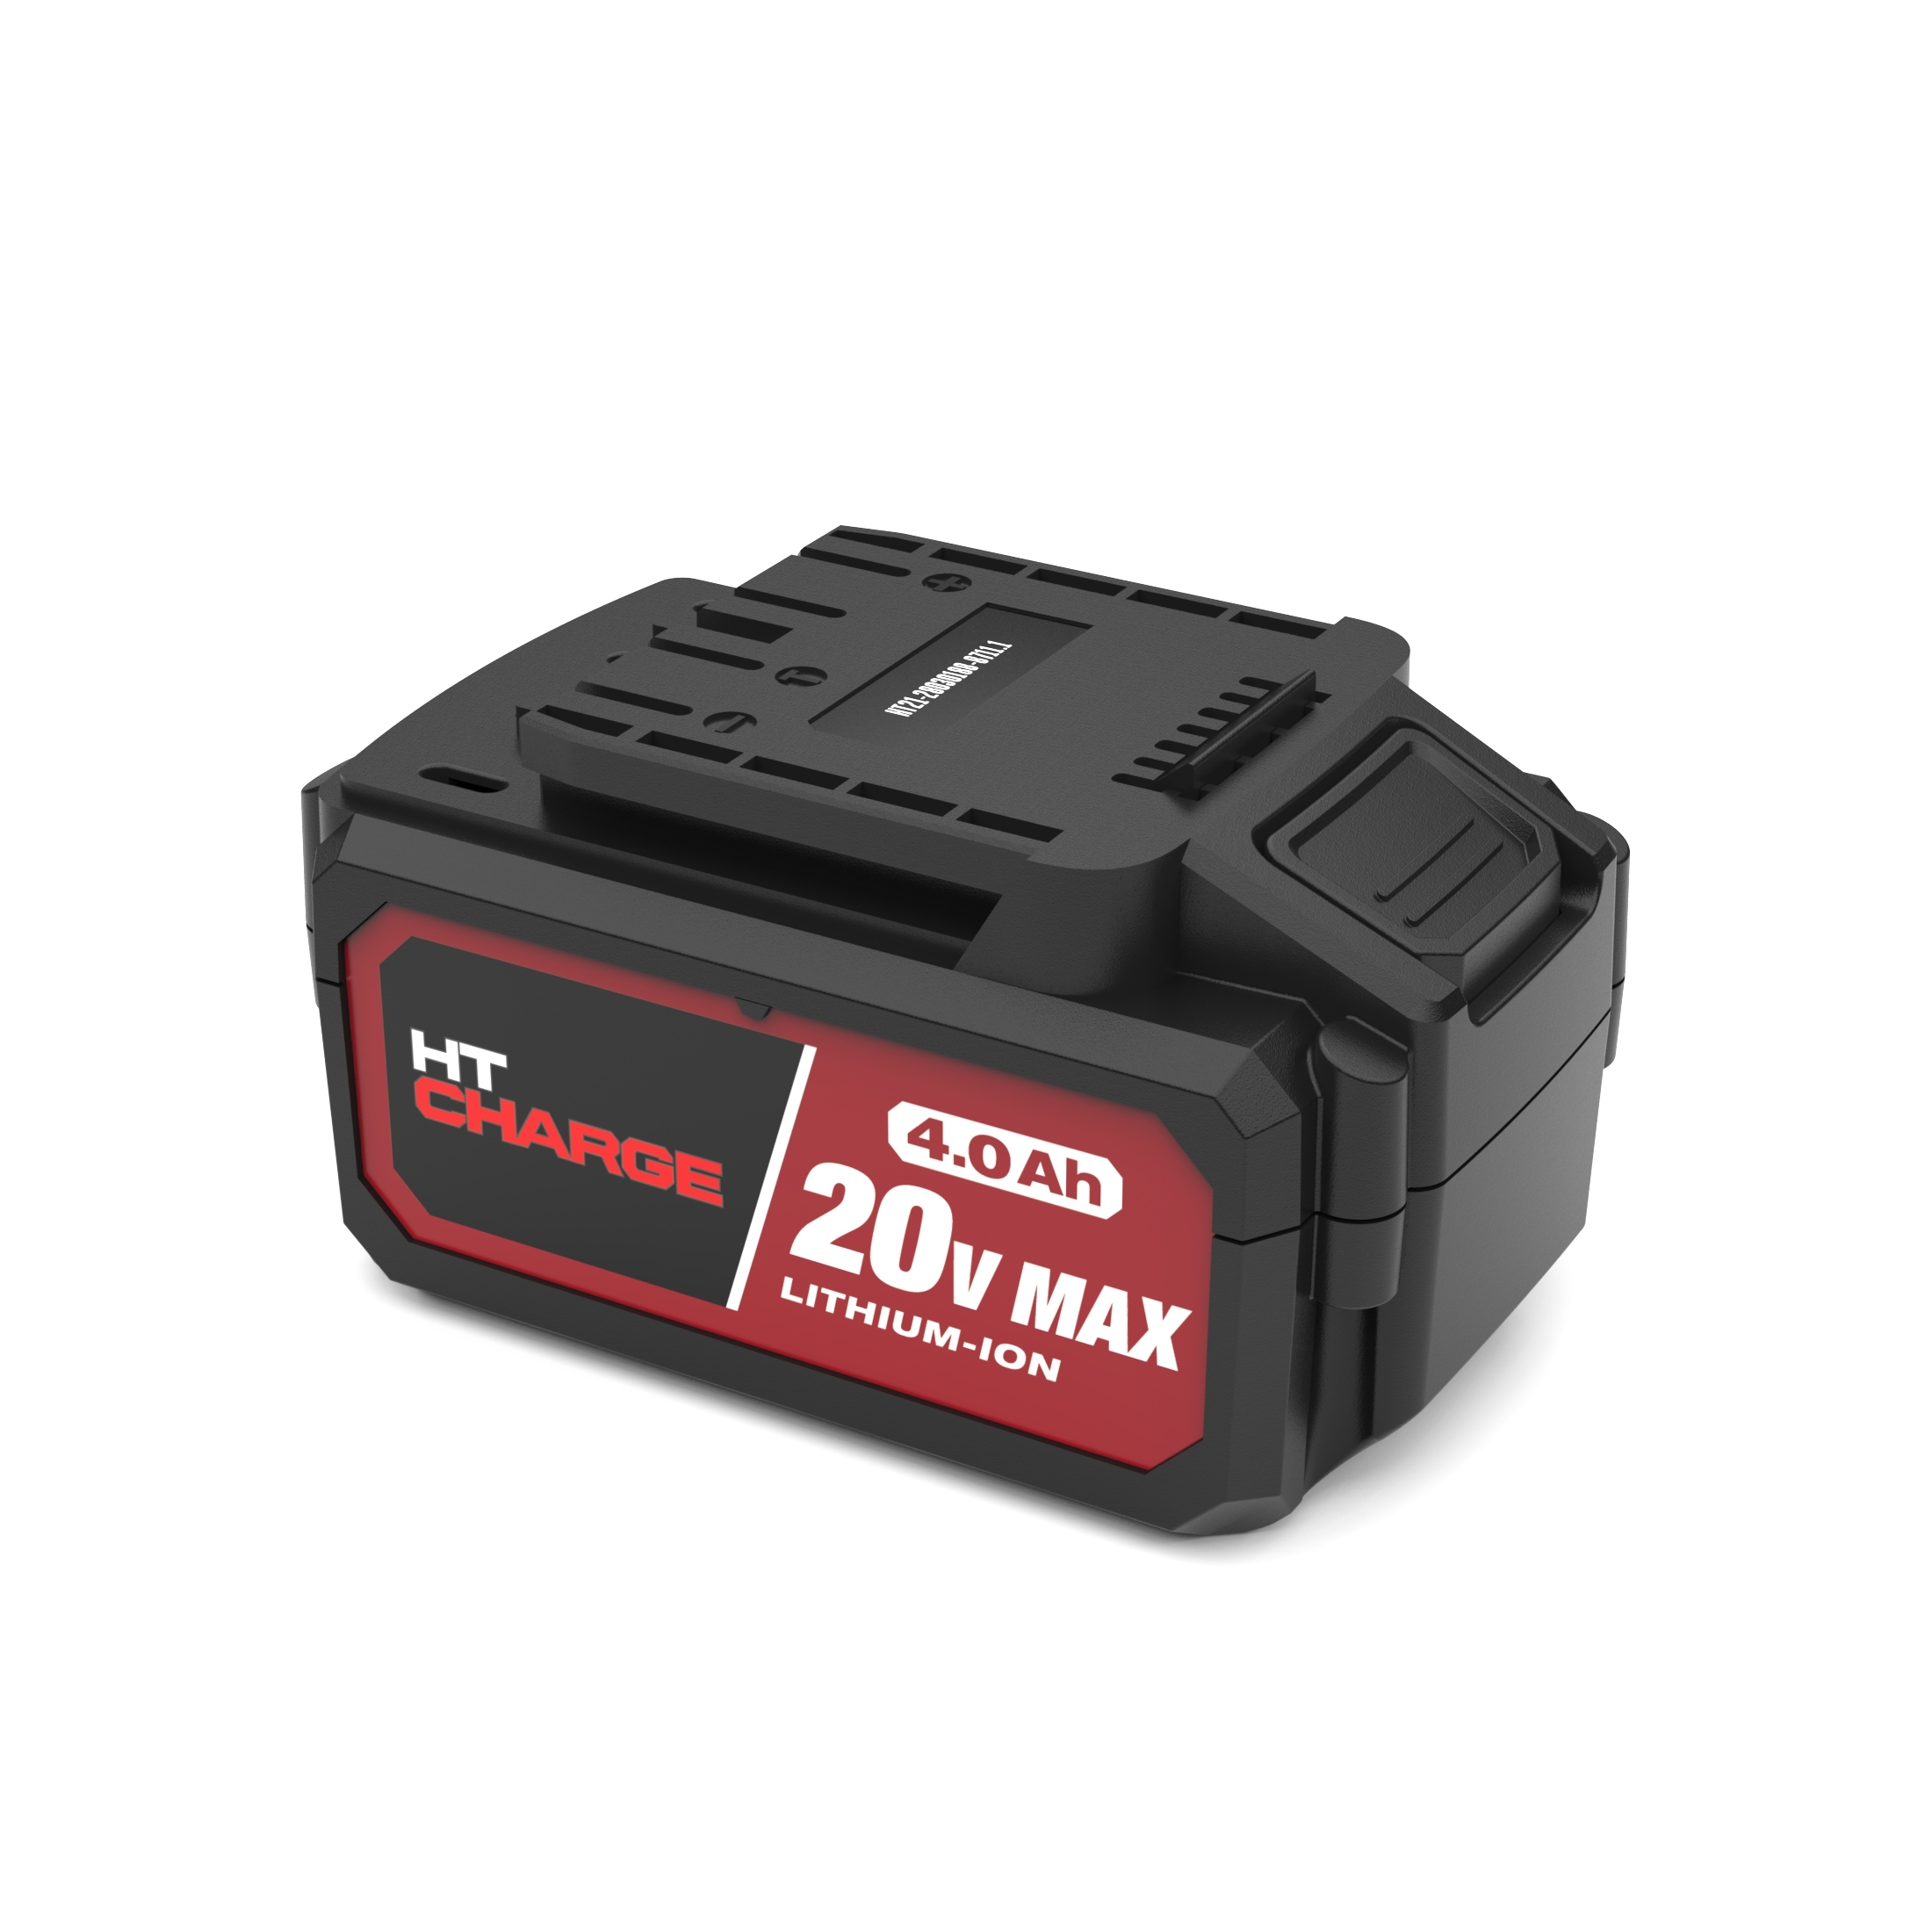 Super Handy GUT067 Rechargeable Battery 20V 4Ah New